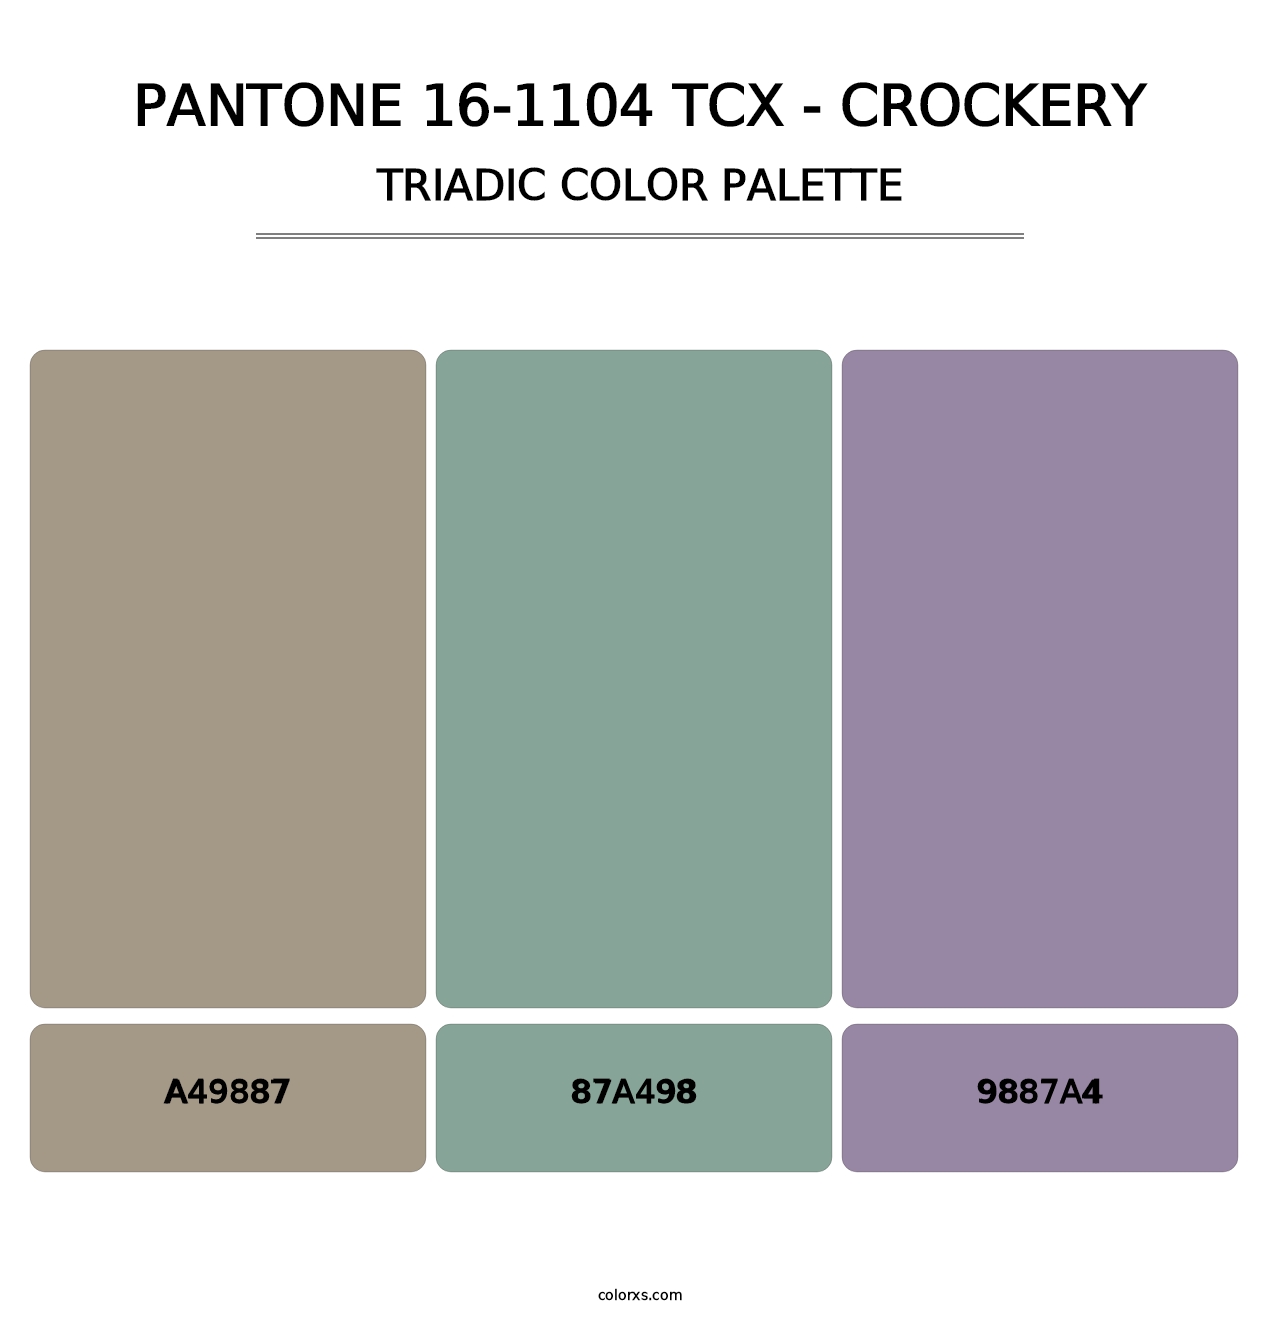 PANTONE 16-1104 TCX - Crockery - Triadic Color Palette